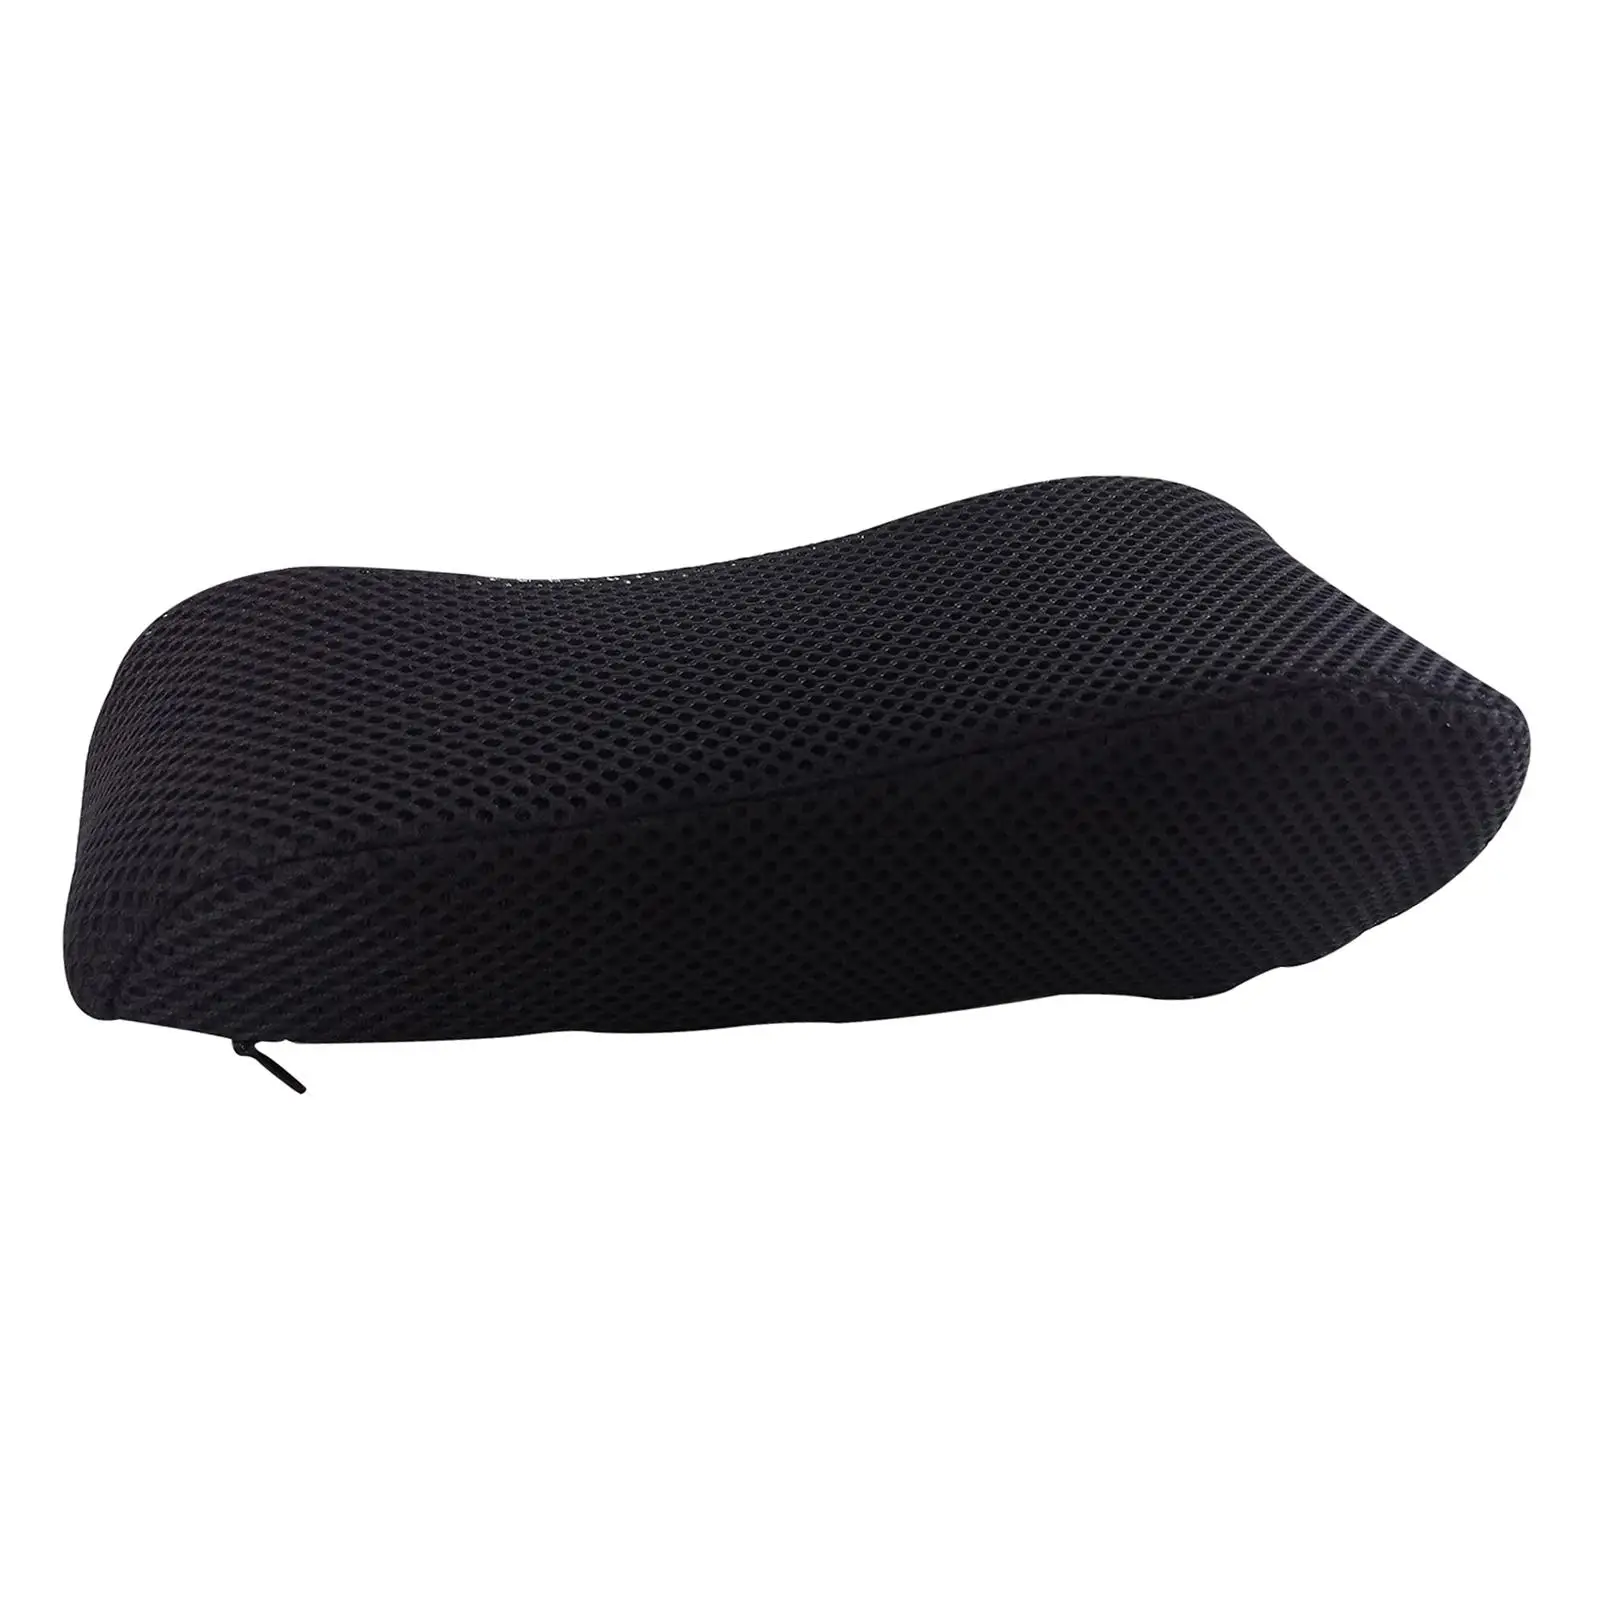 Ergonomic Armrest Cushions Comfortable Memory Foam Support Cushion Arm Rest